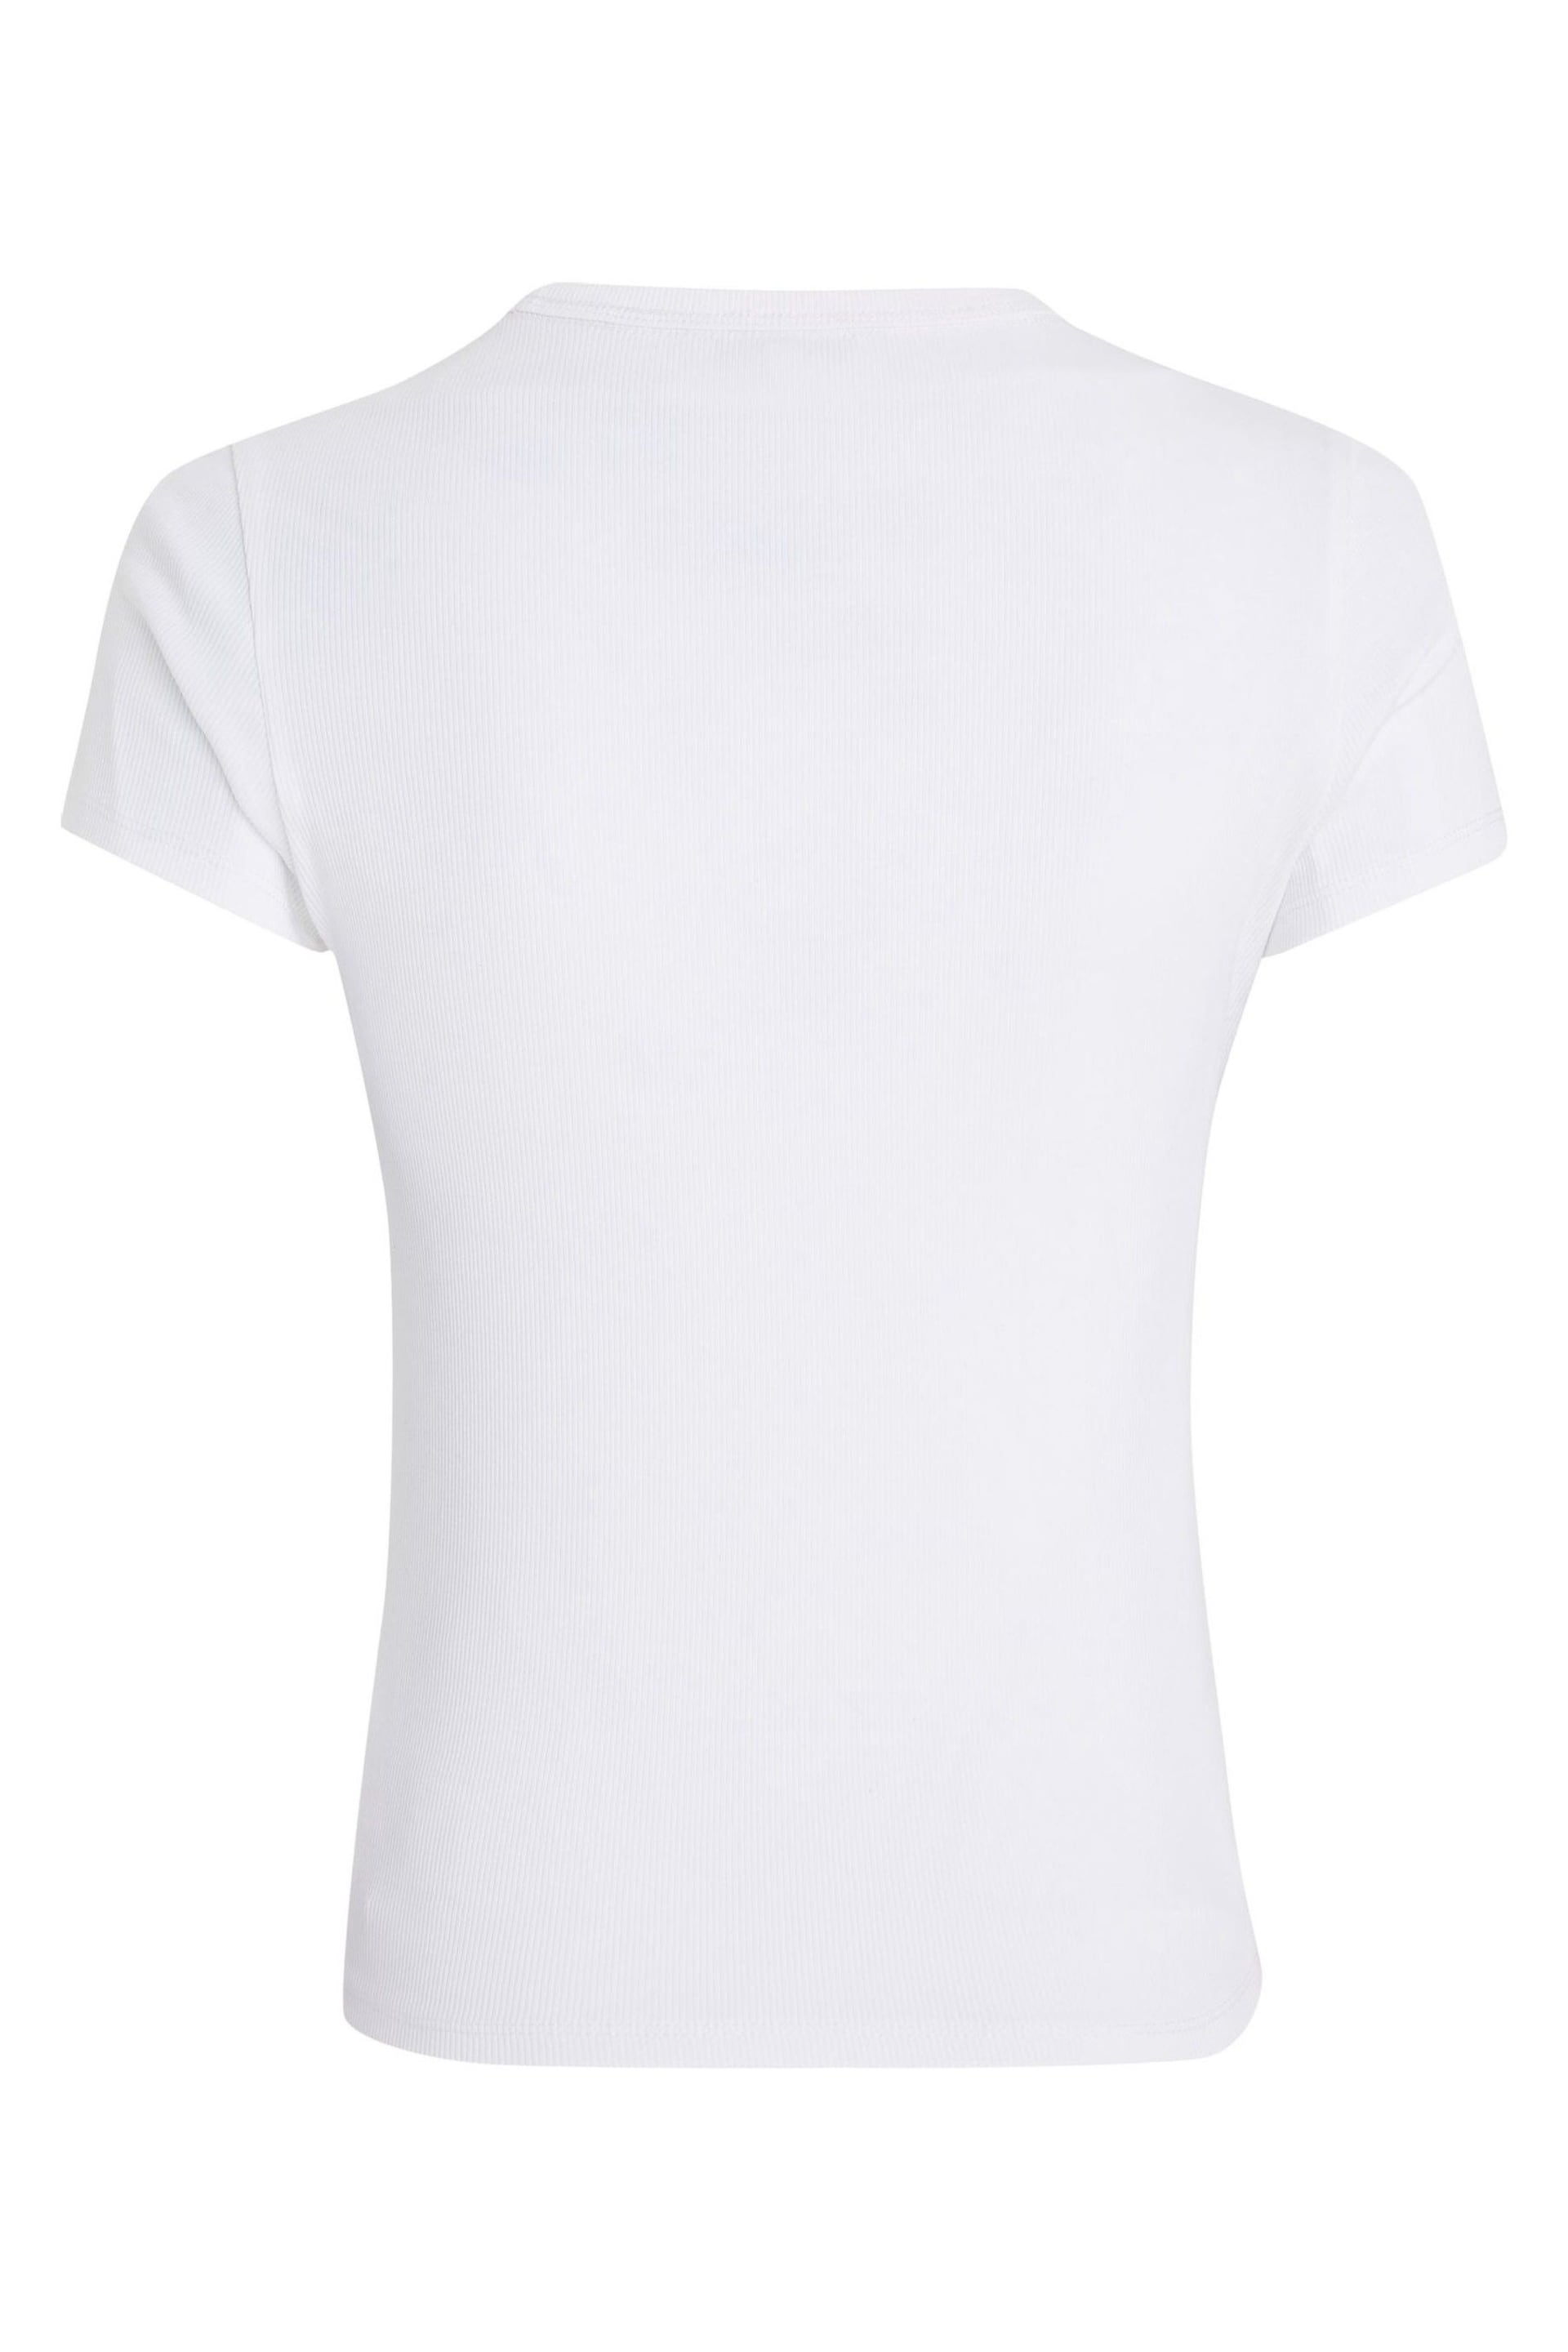 Tommy Jeans Slim Essential Rib T-Shirt - Image 5 of 6